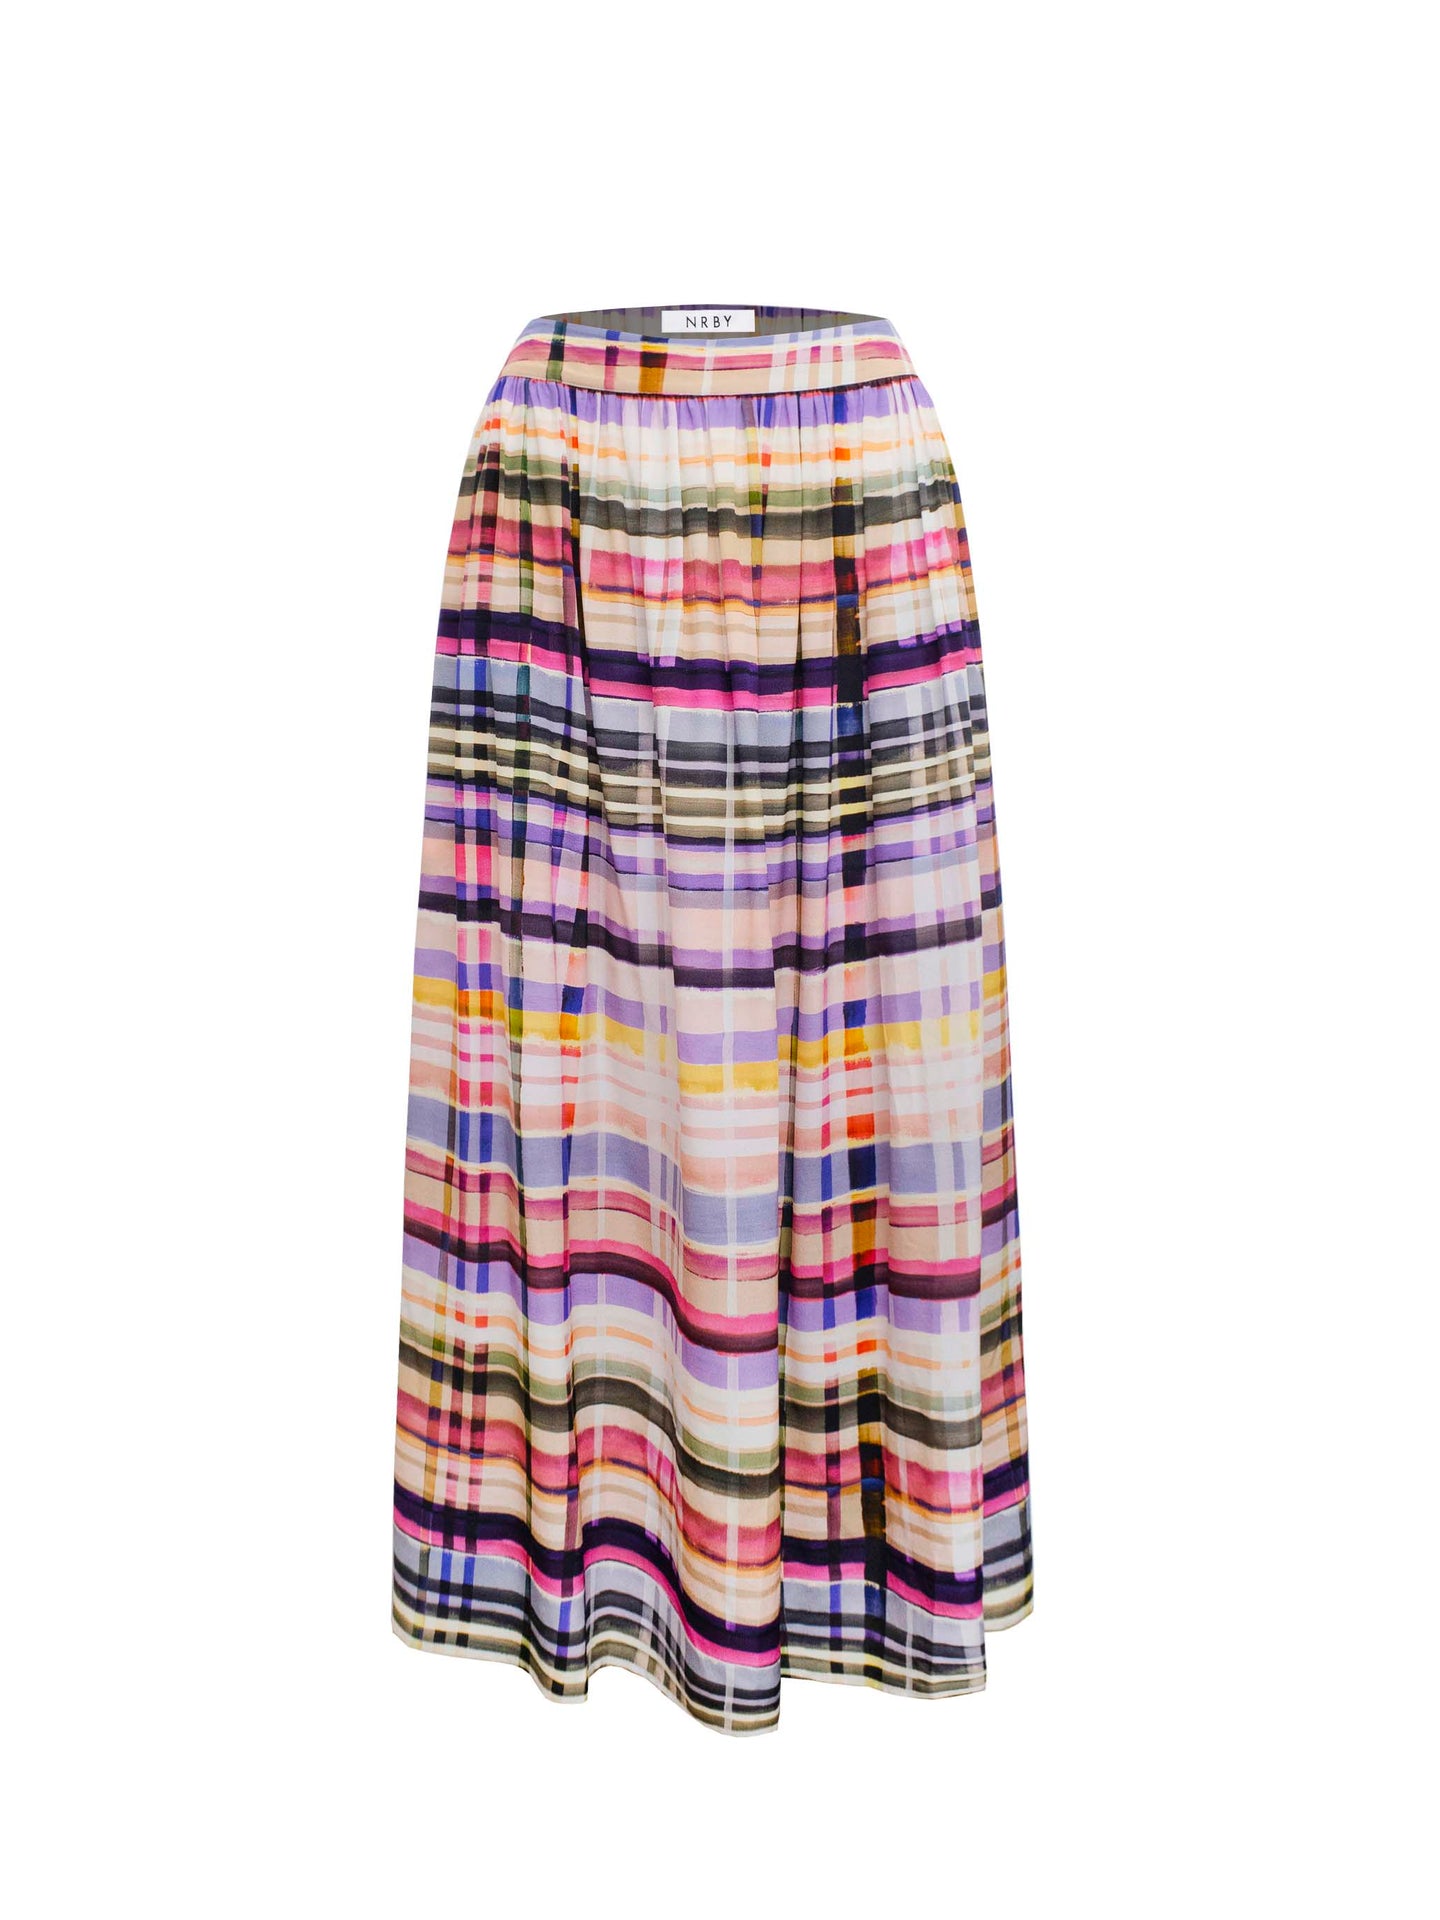 Lina silk blurred check skirt